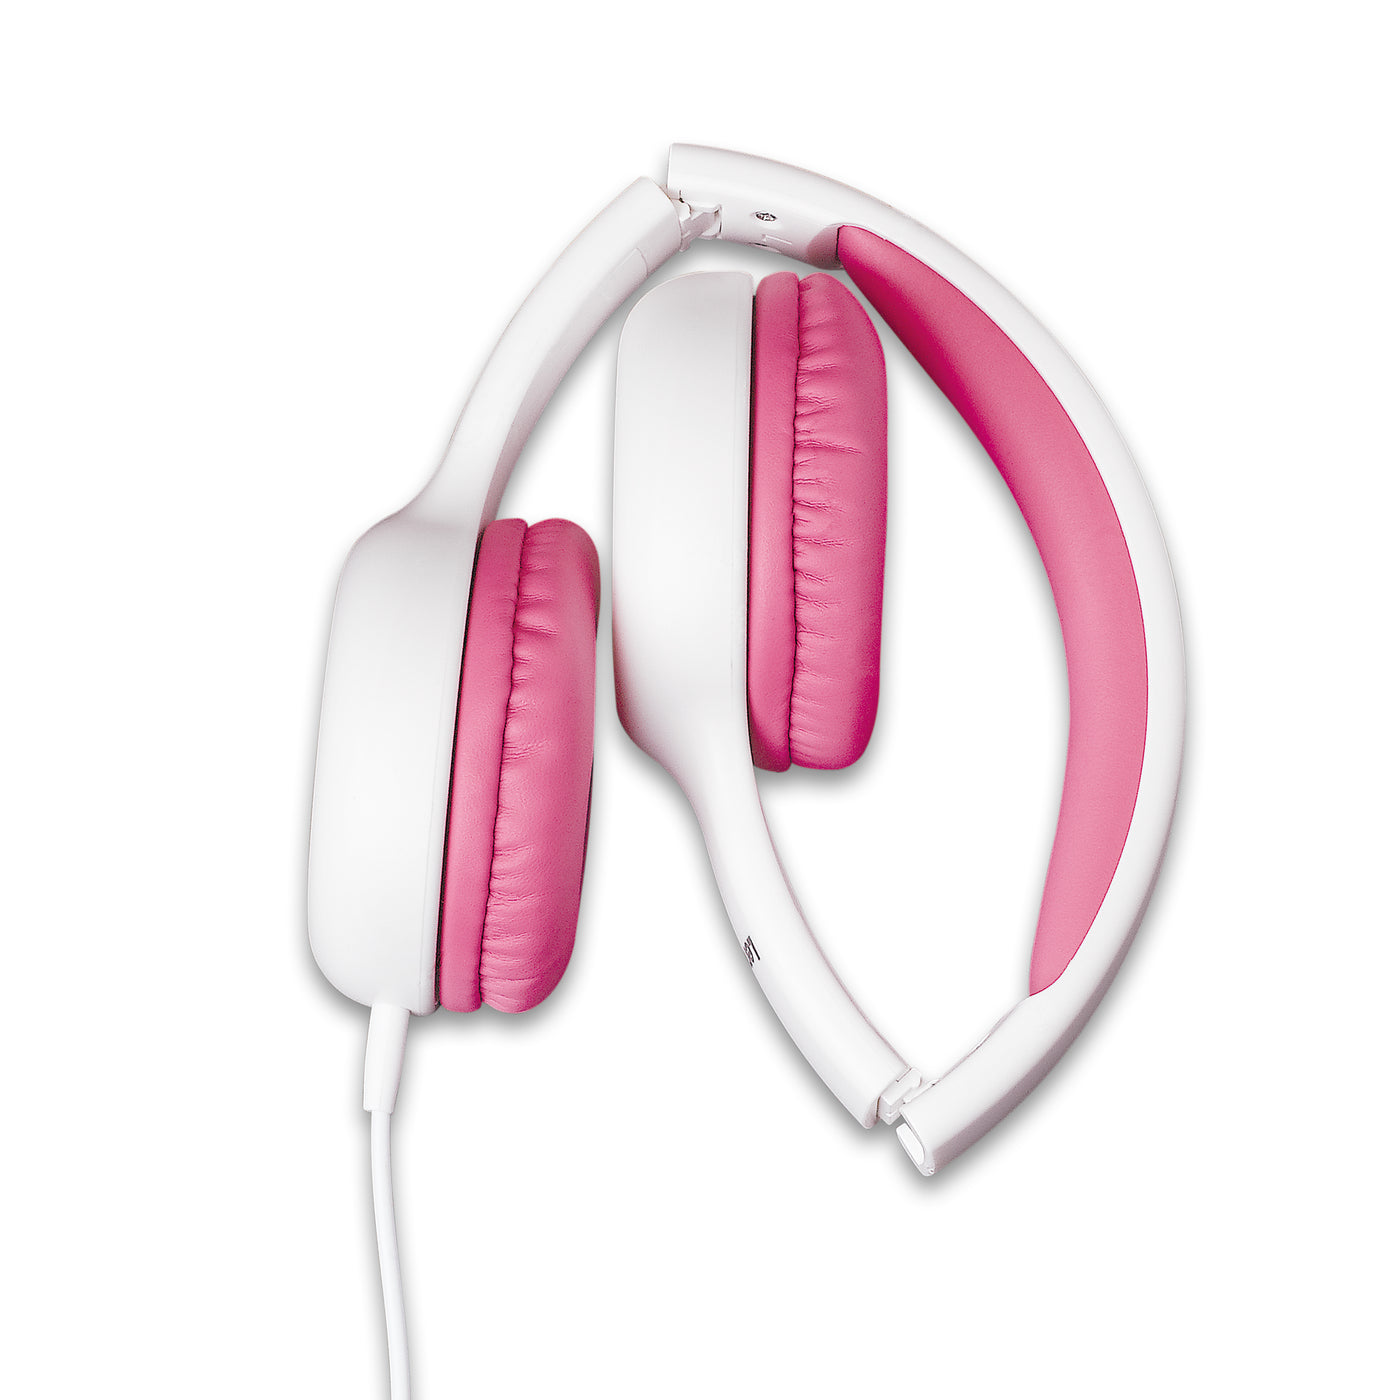 LENCO HP-010PK - Headphone for kids, pink